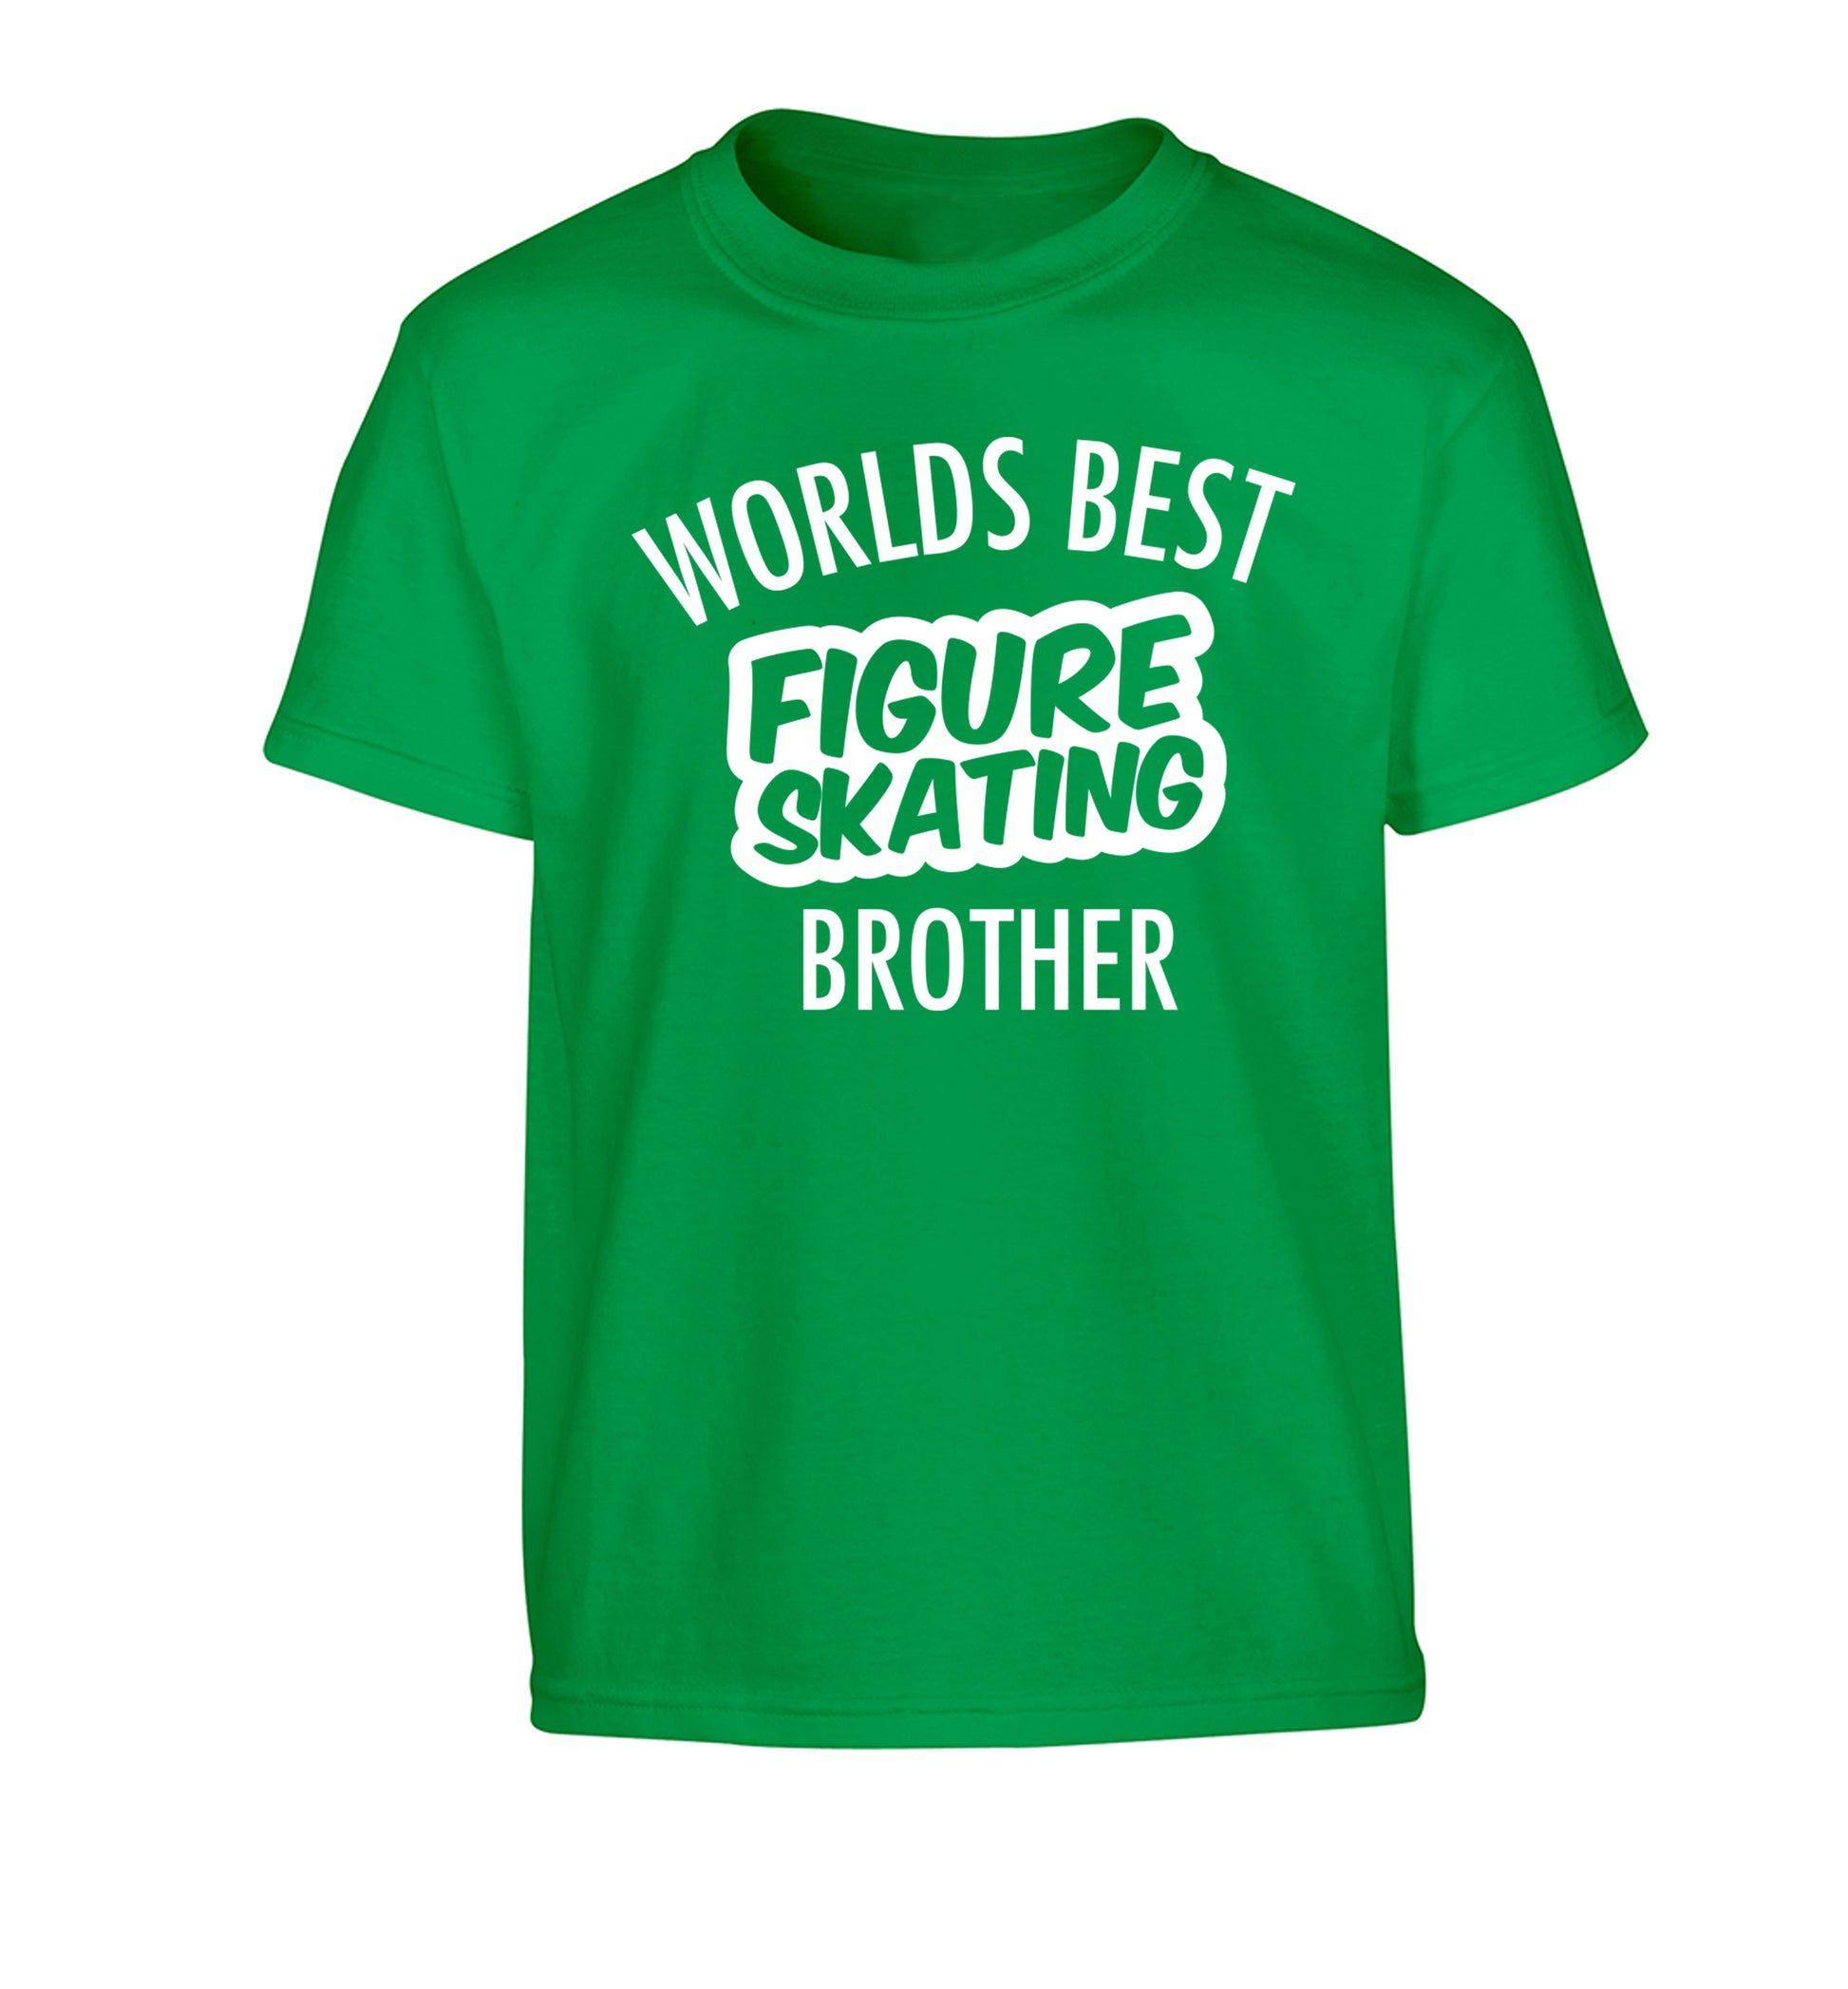 Worlds best figure skating brother Children's green Tshirt 12-14 Years